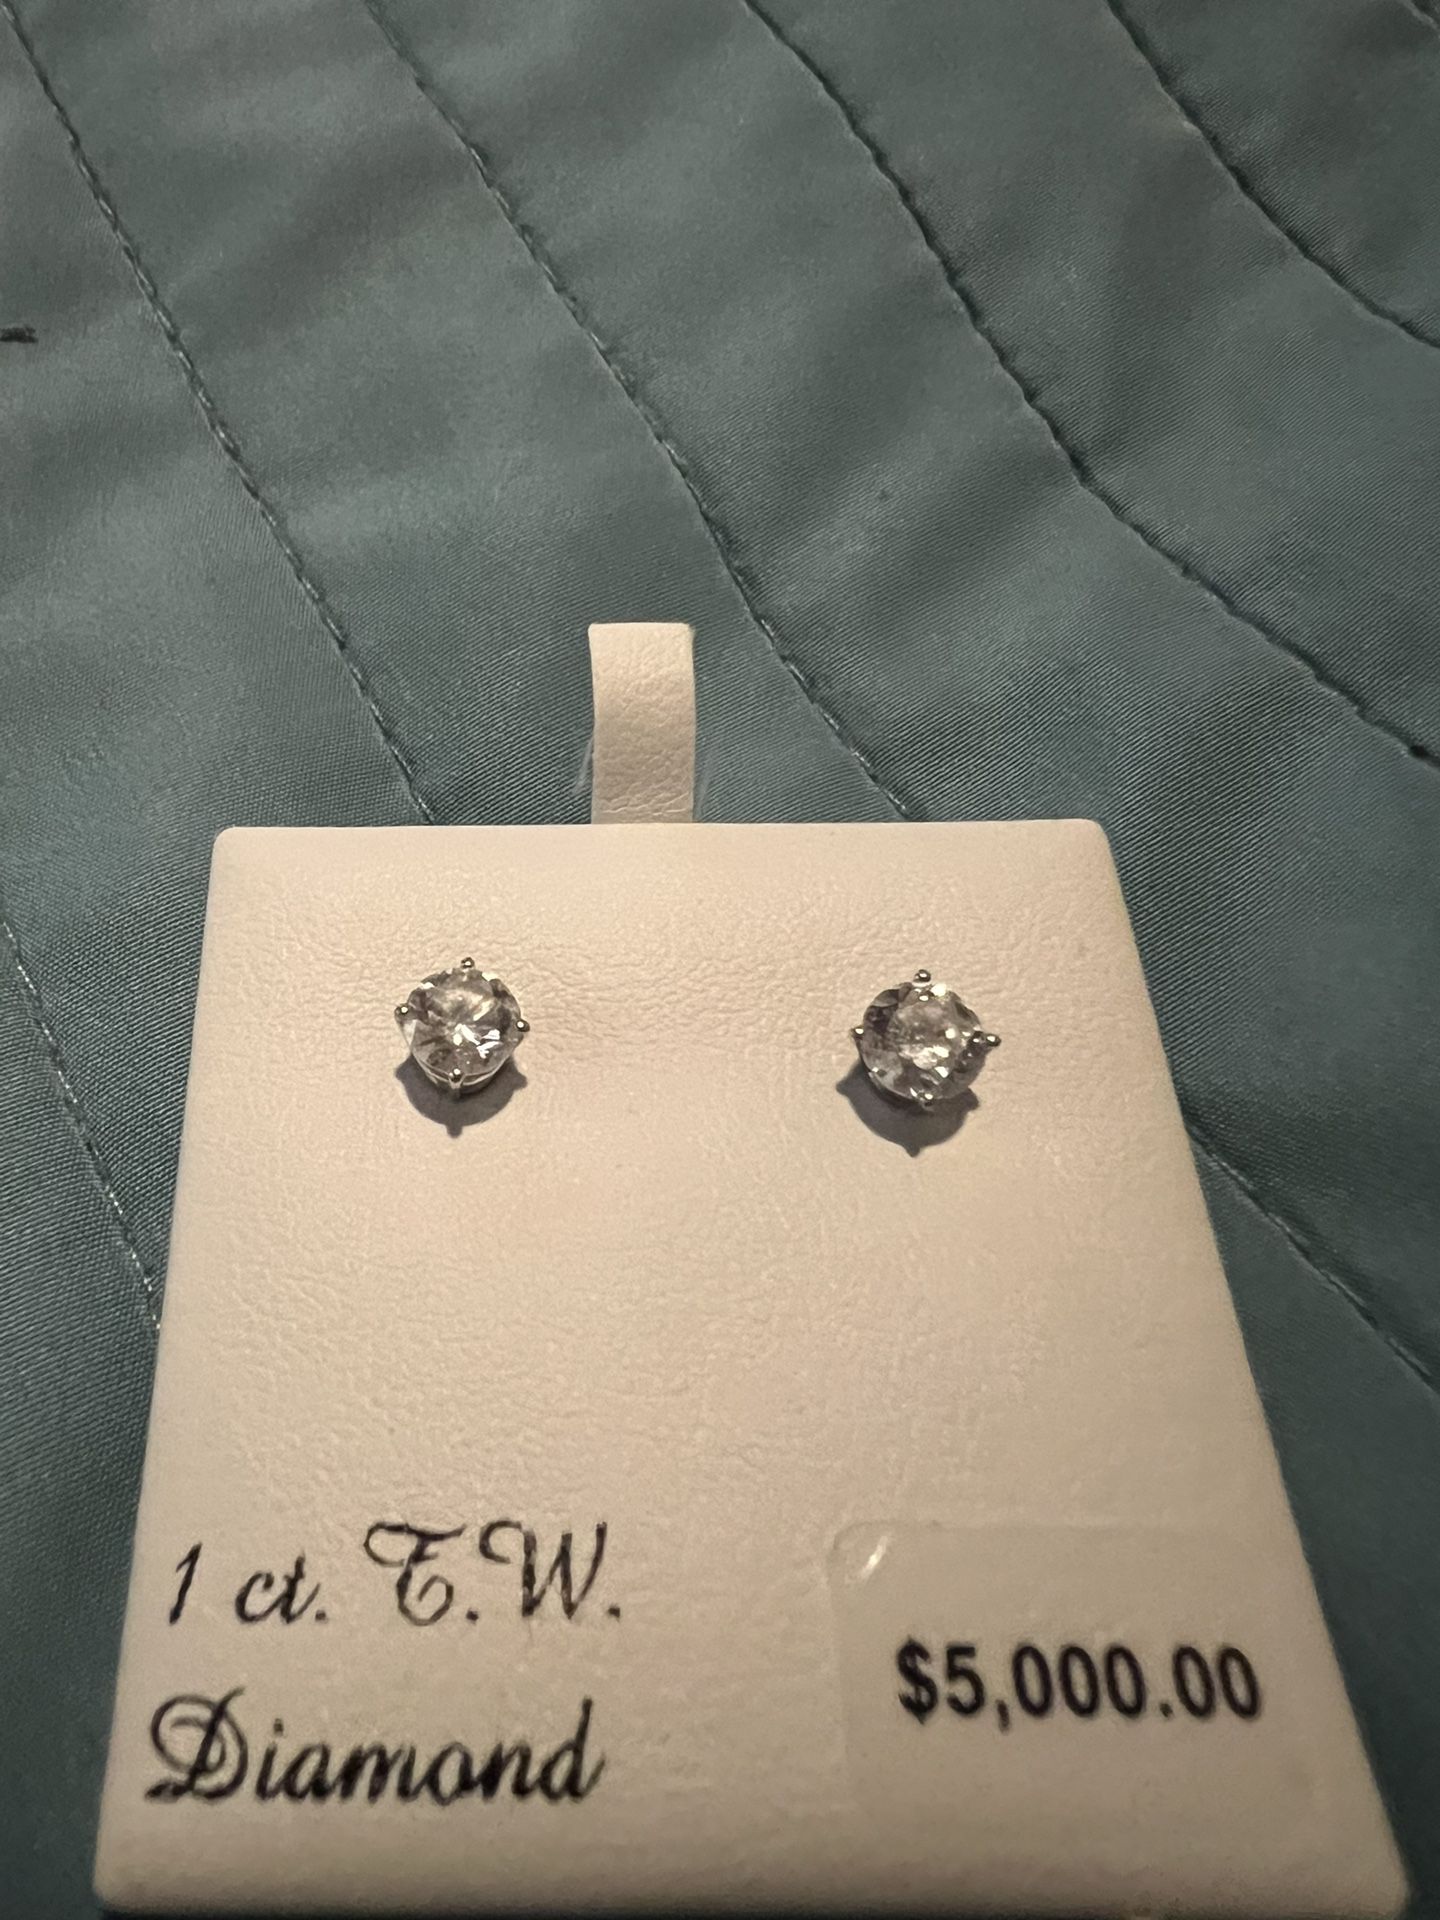 Genuine Diamond Earrings Purchase From Kohl’s 